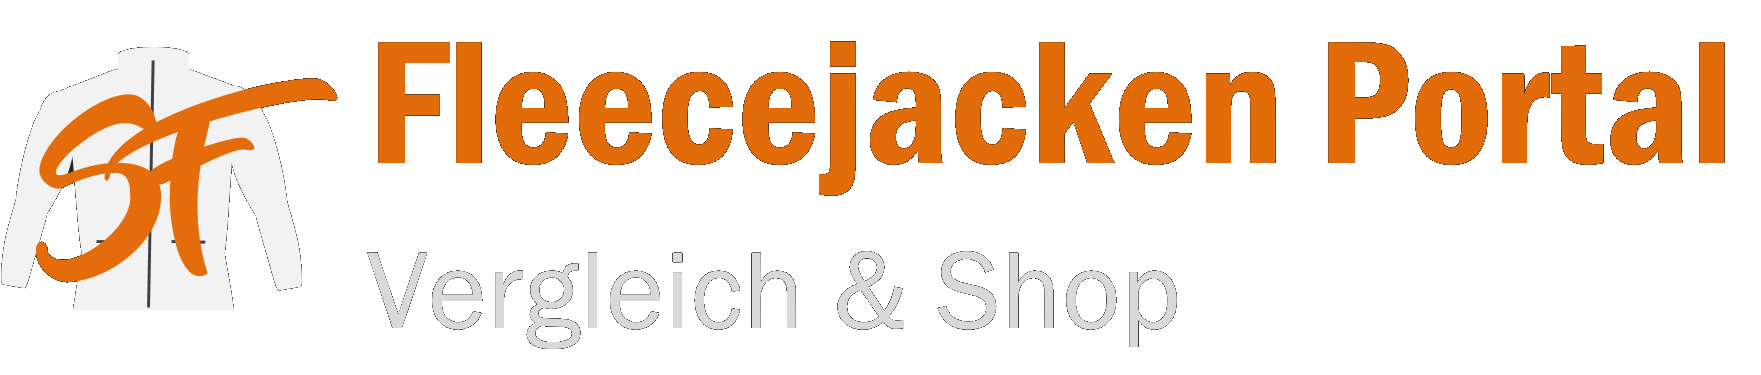 strickfleecejacke-logo-new